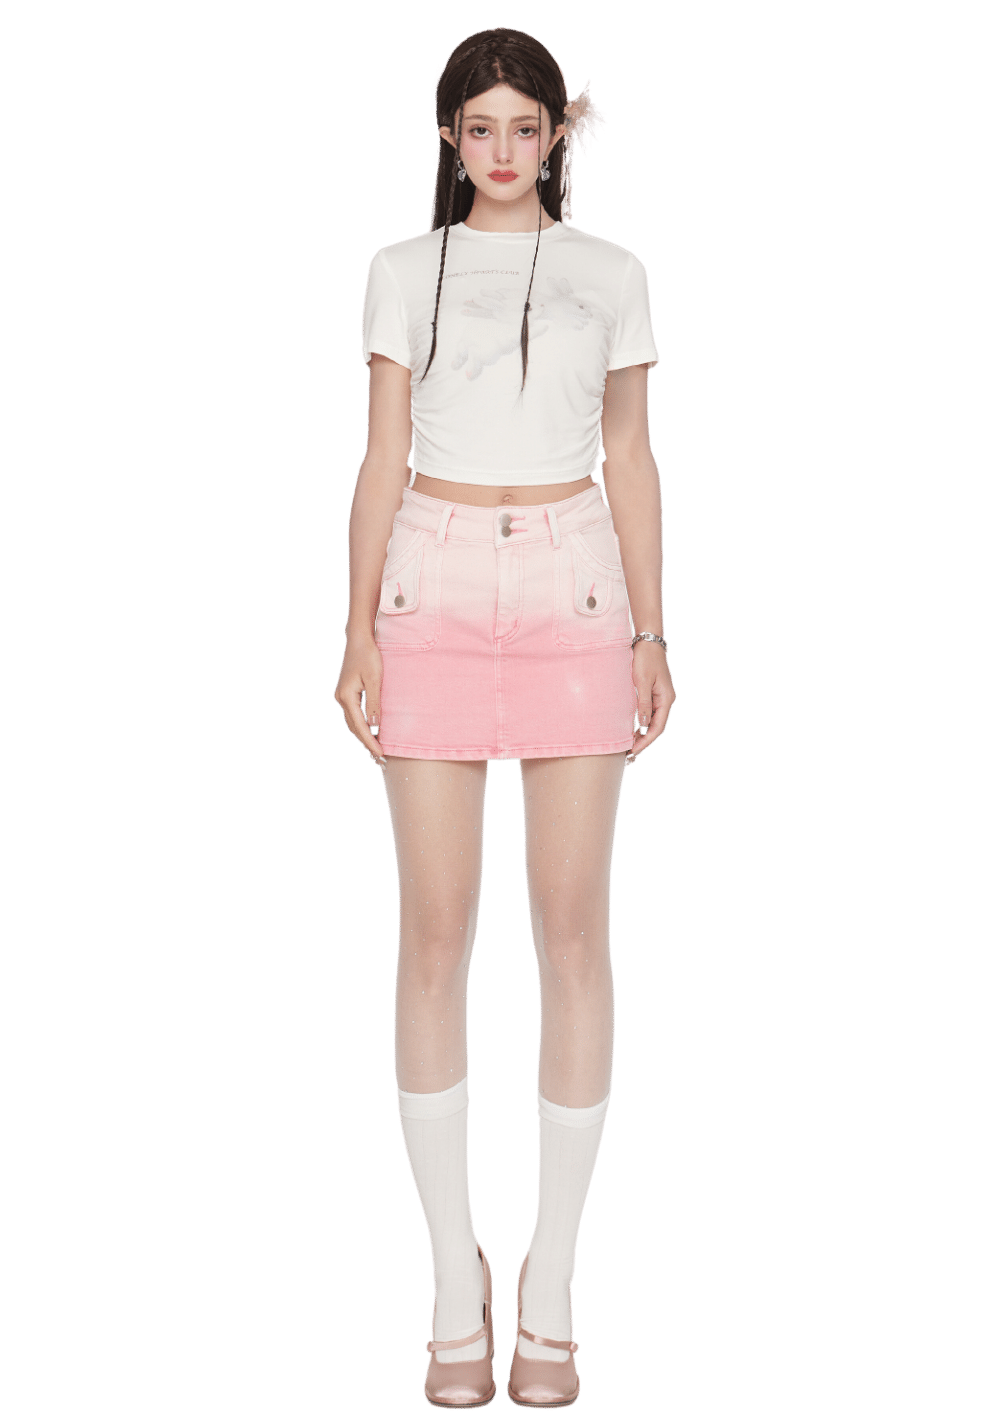 Powder Gradient Denim Mini Skirt - PSYLOS 1, Powder Gradient Denim Mini Skirt, skirt, LHC MODA, PSYLOS 1